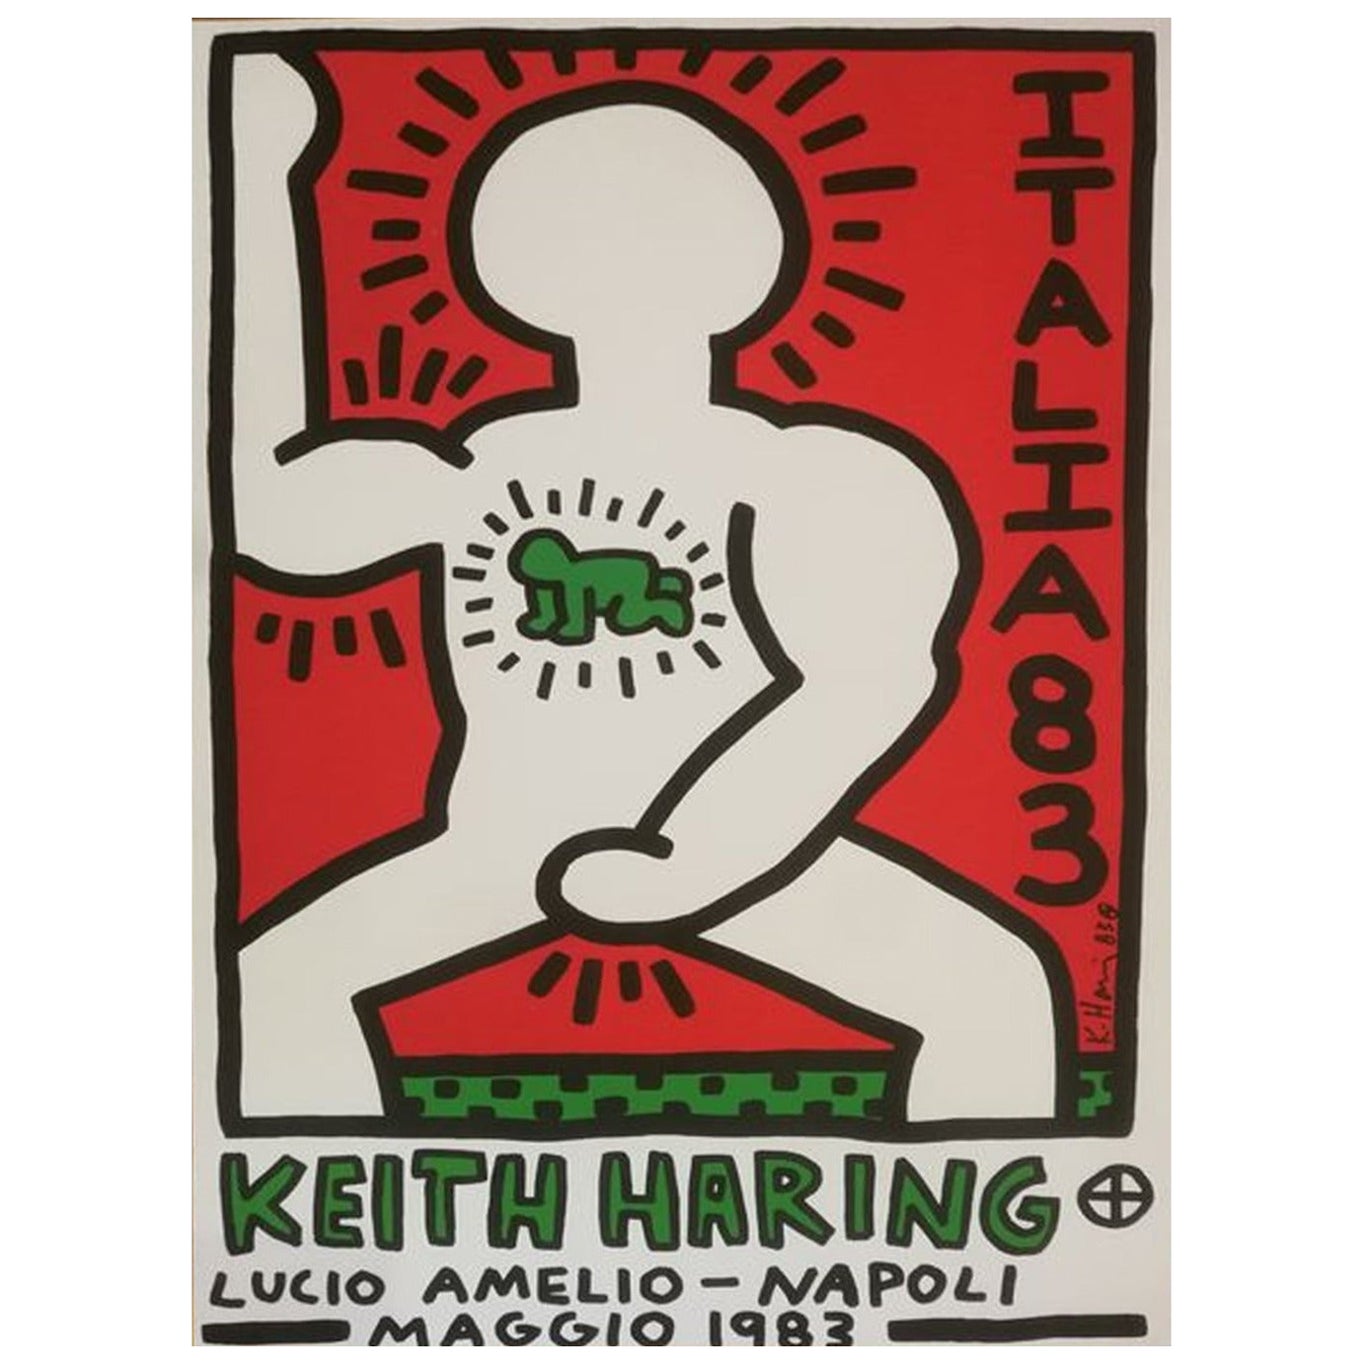 1983 Keith Haring, Lucio Amelio Napoli Original Vintage Poster For Sale